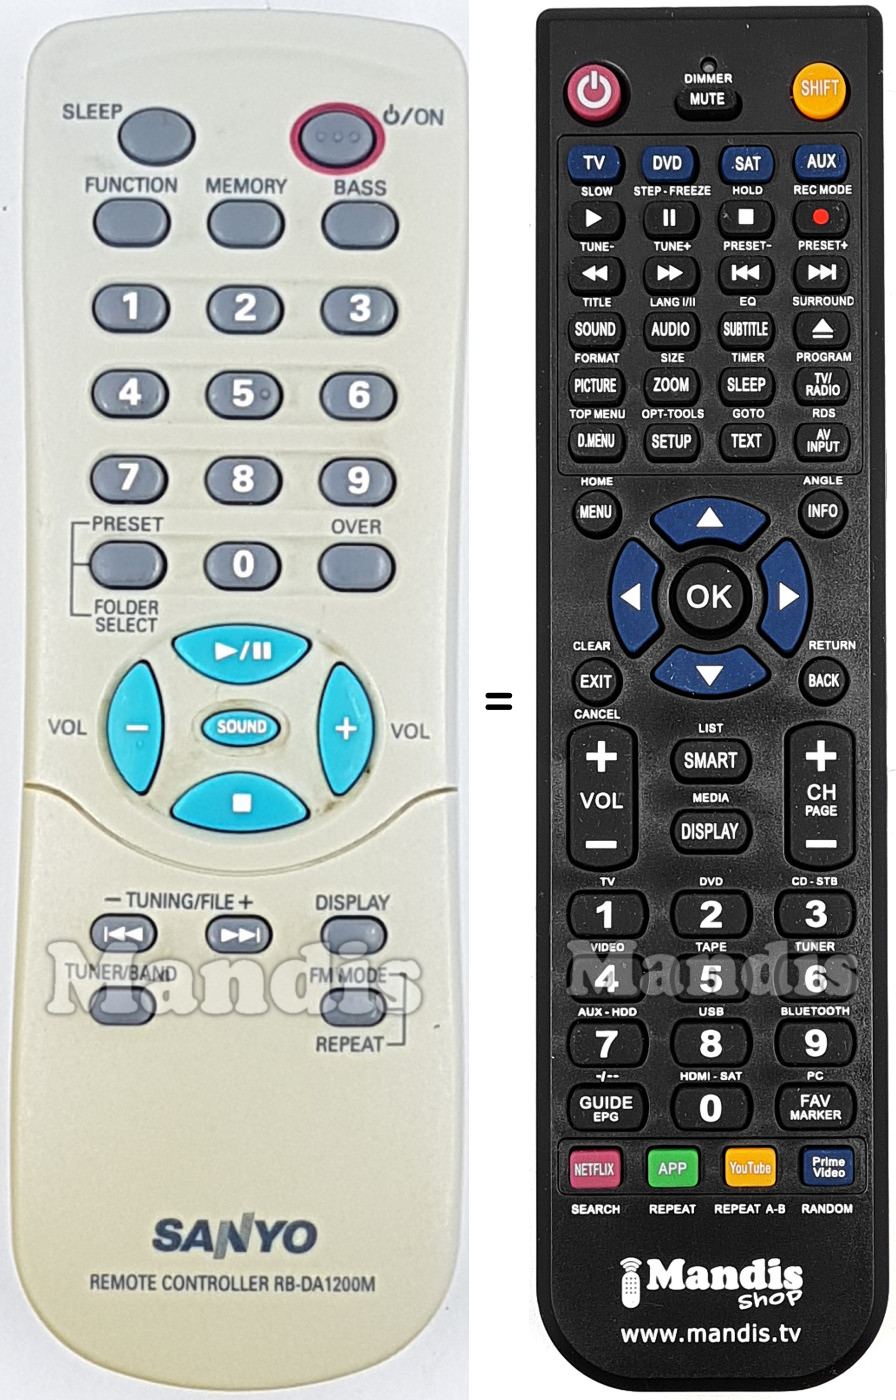 Replacement remote control RBDA1200M